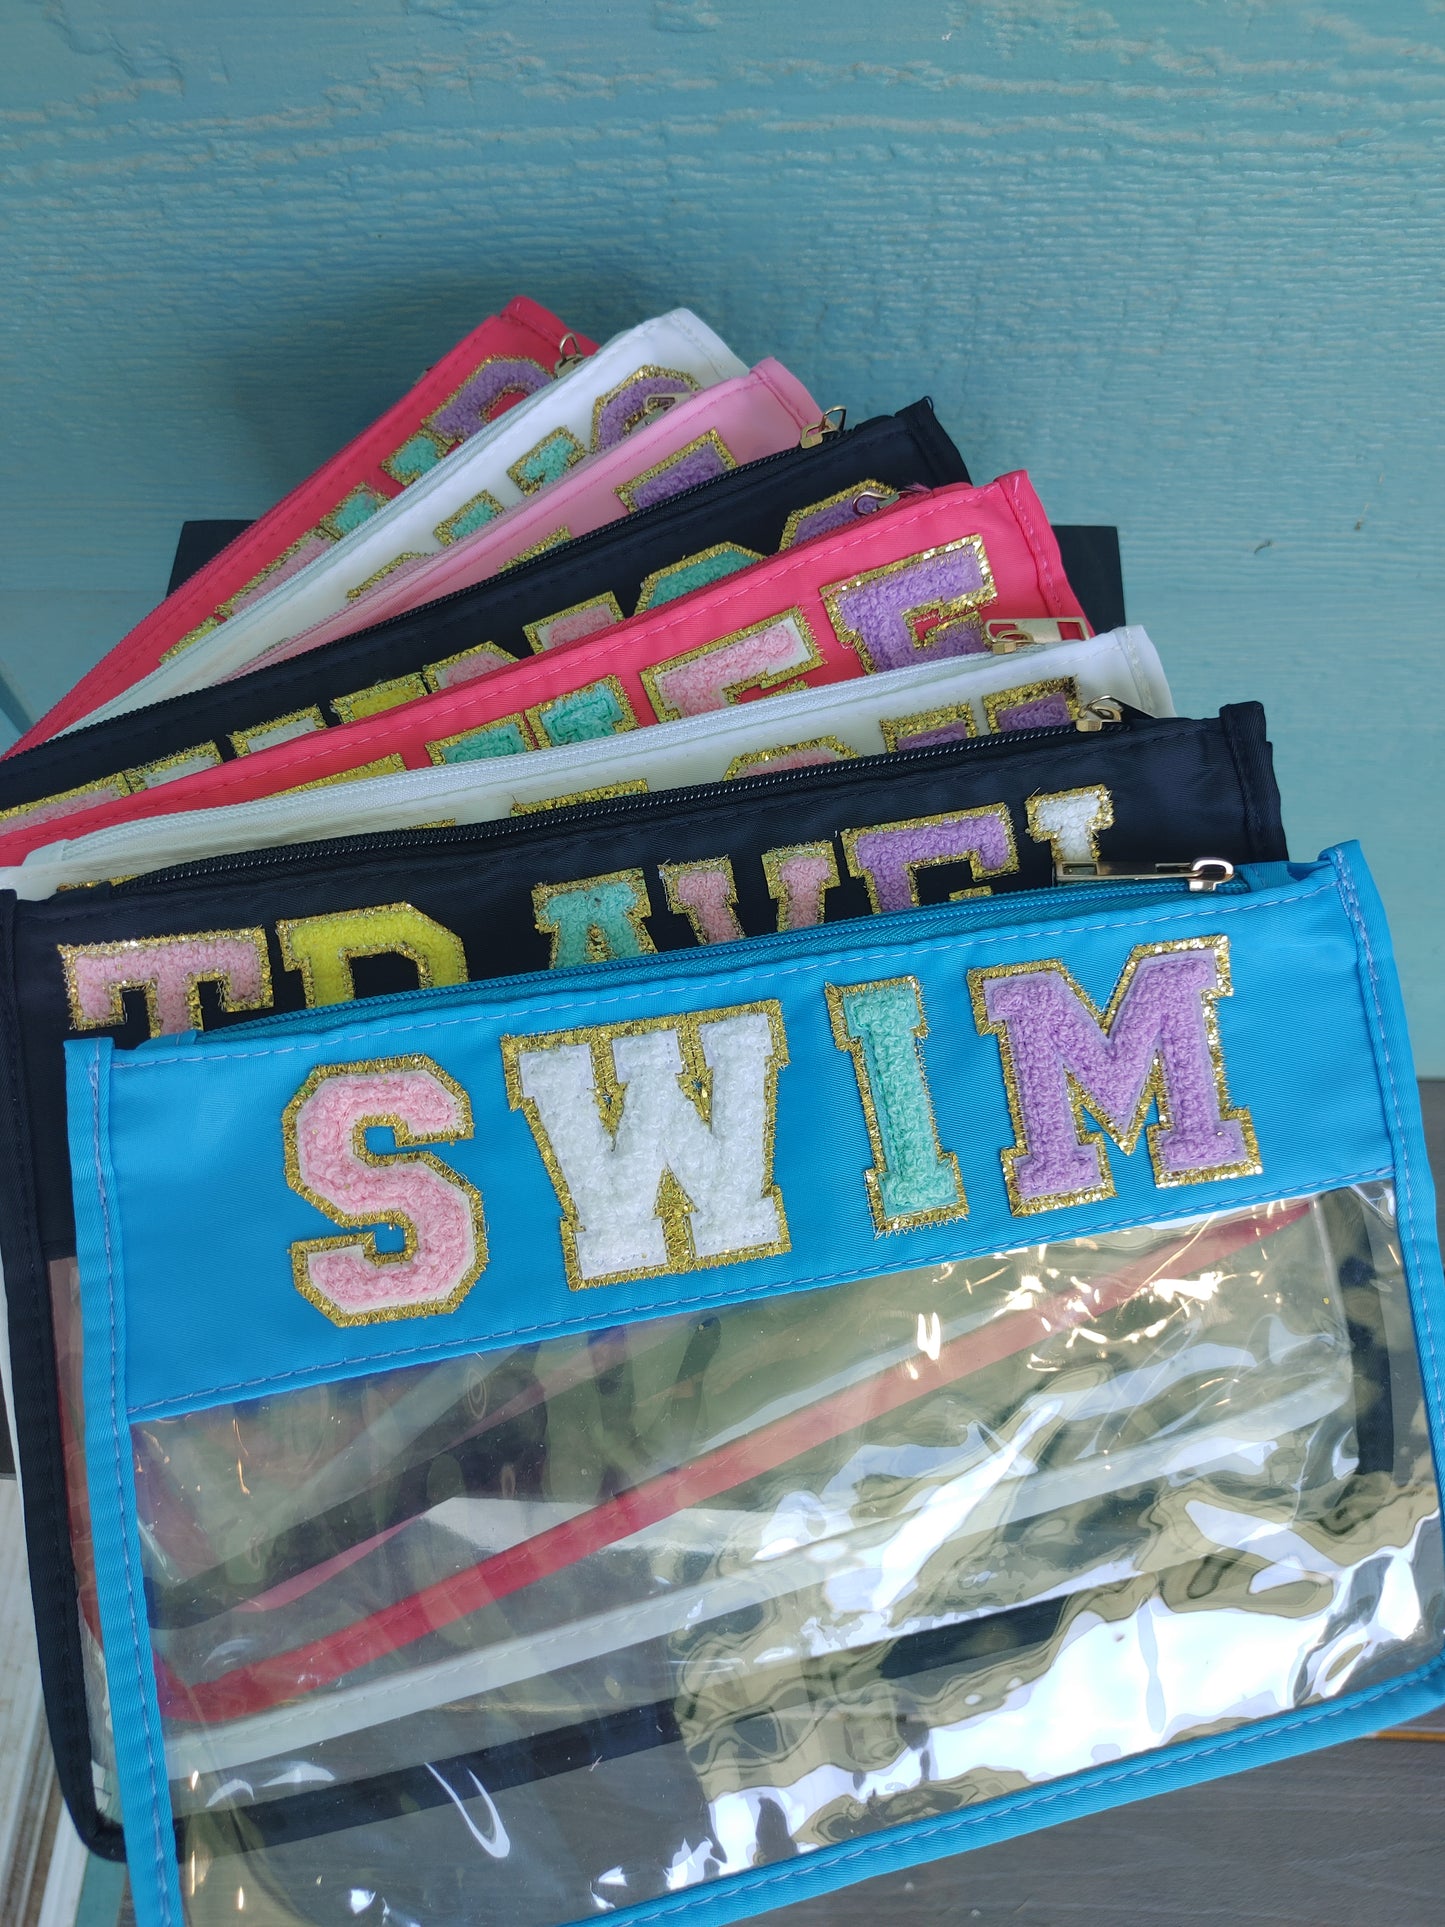 Clear Blue "Swim" Bag